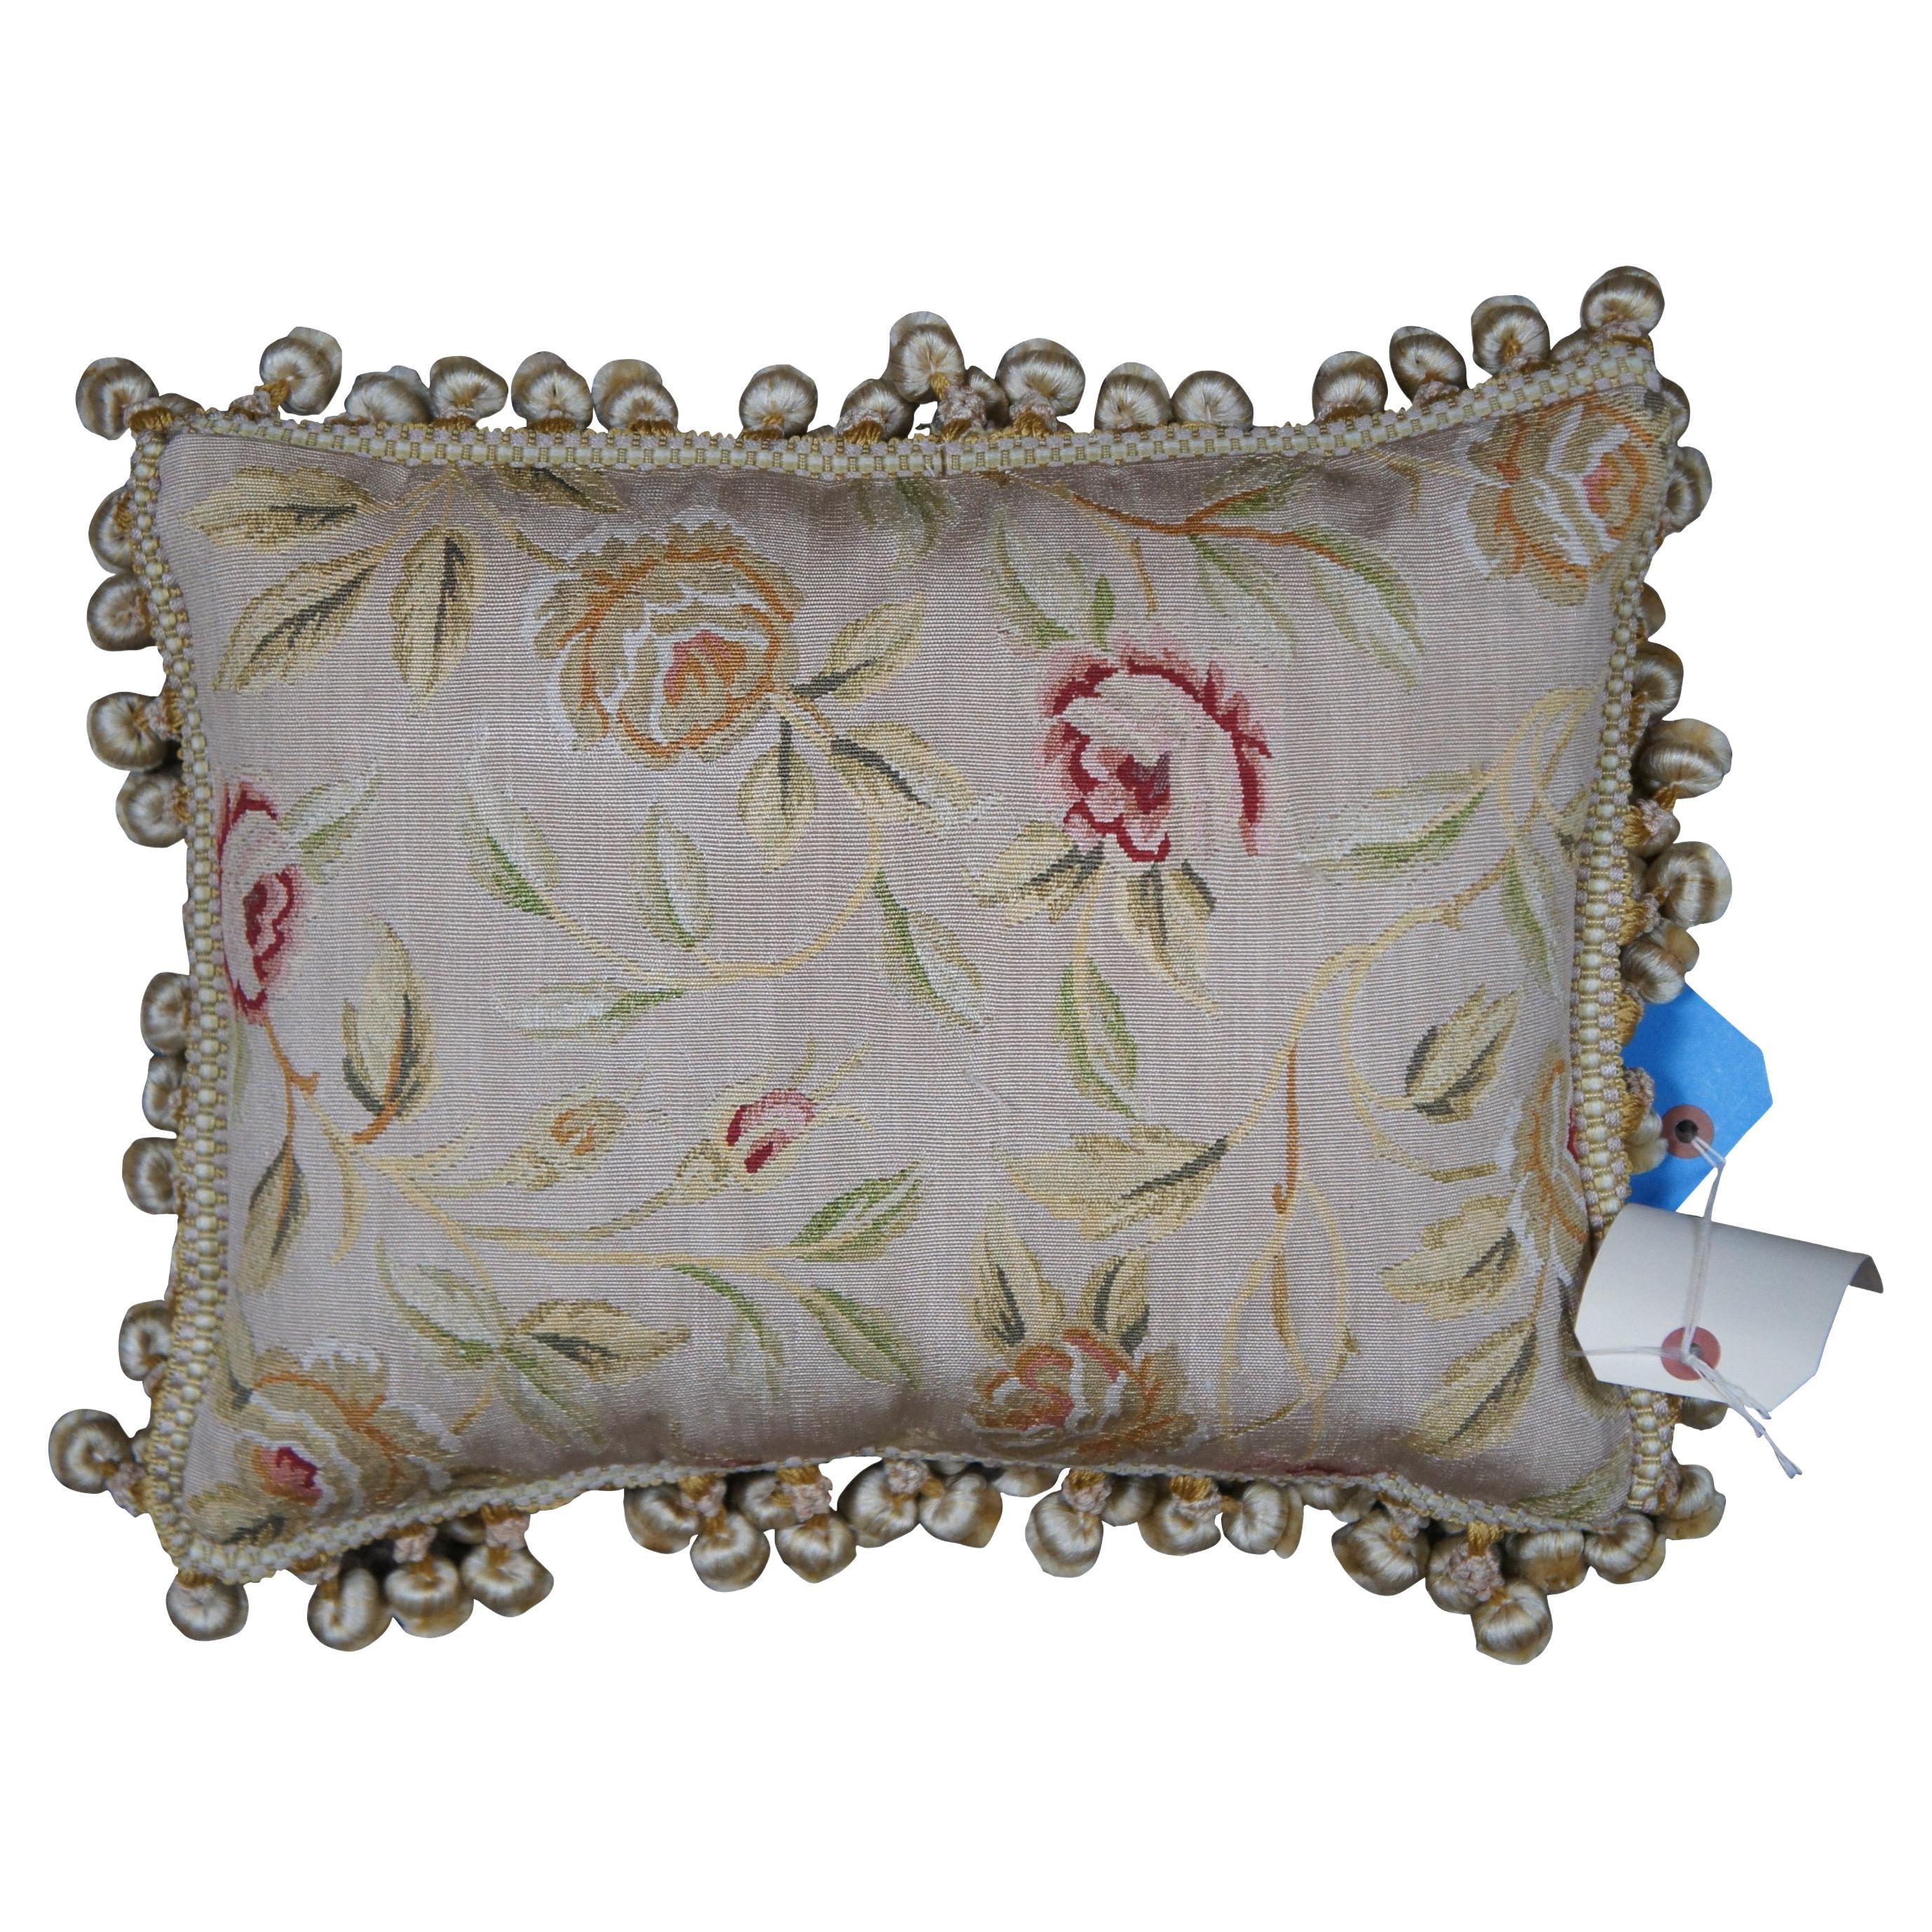 Silk Down Filled Floral Rose Embroidered Tassel Lumbar Throw Pillow Cushion 16"